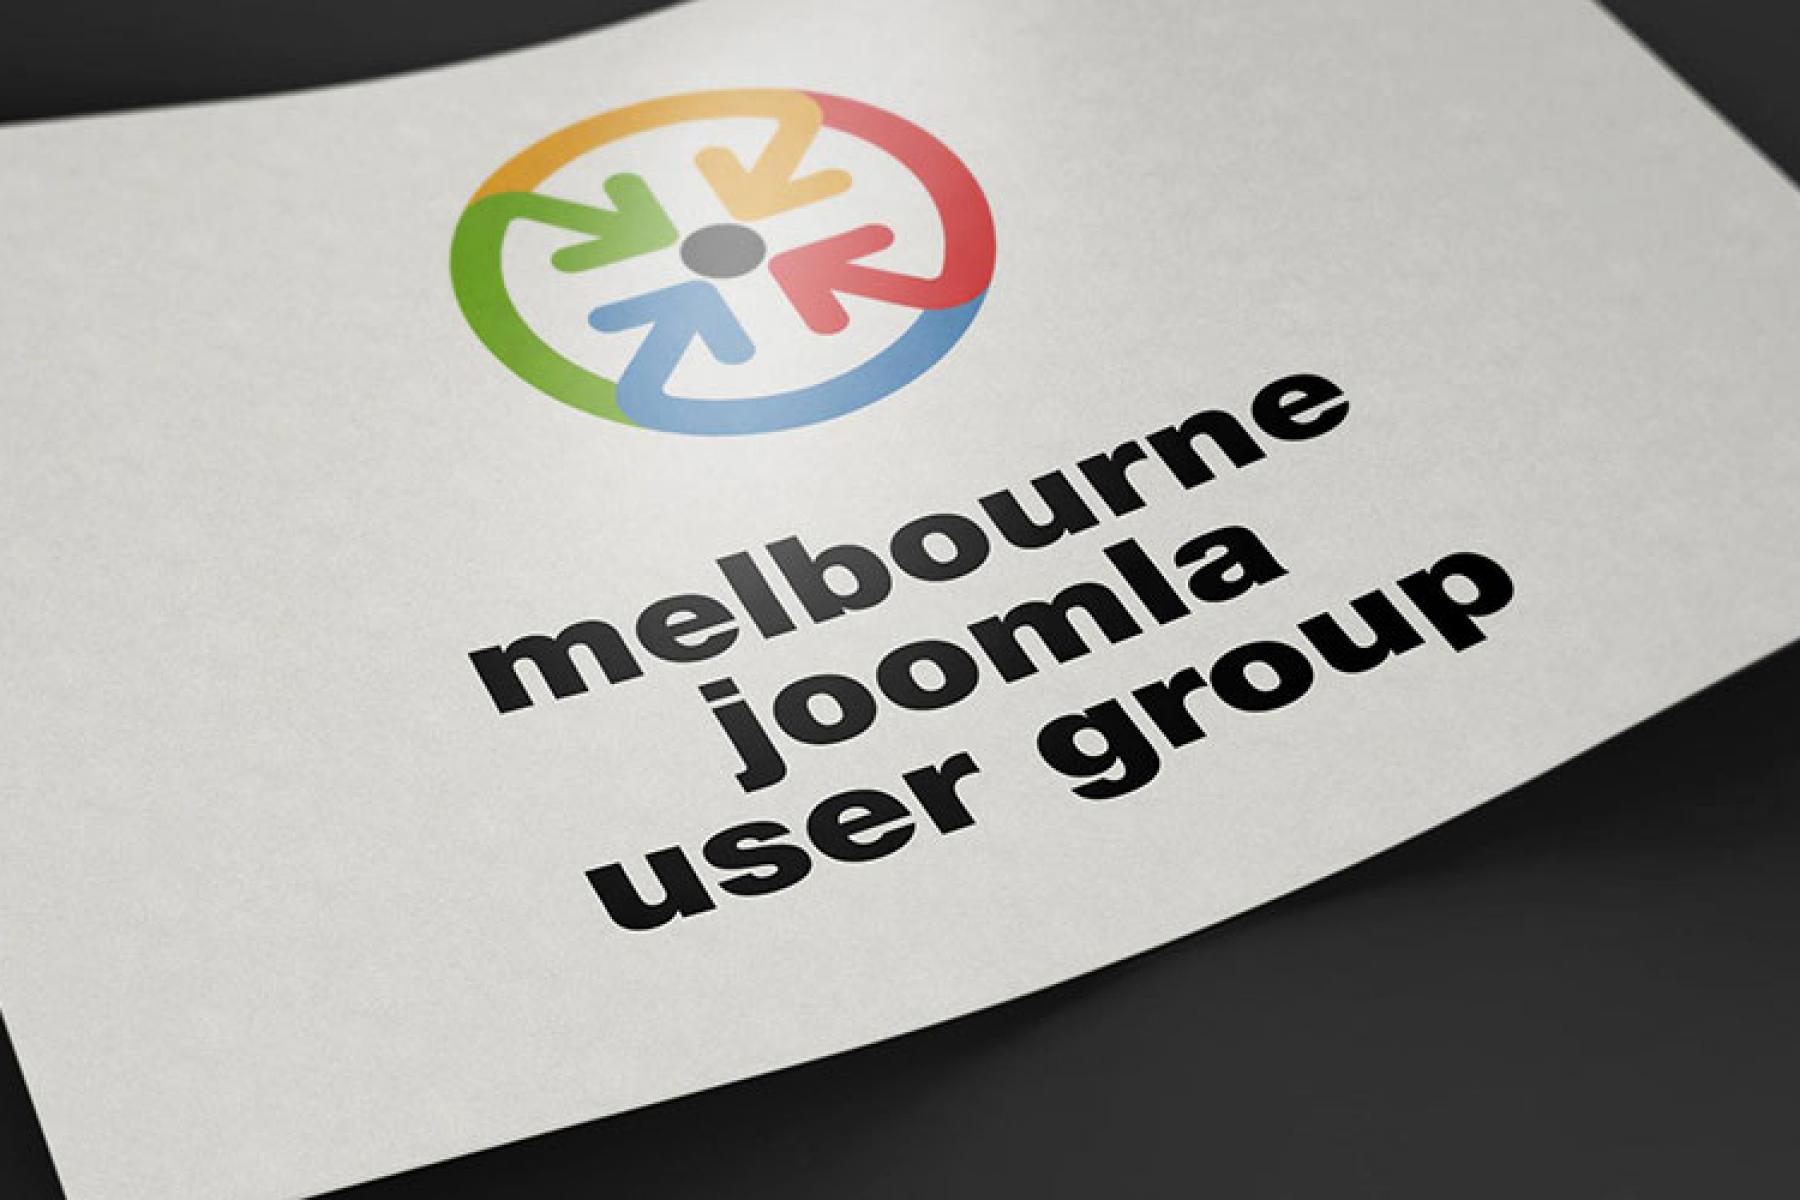 Melbourne Joomla User Group